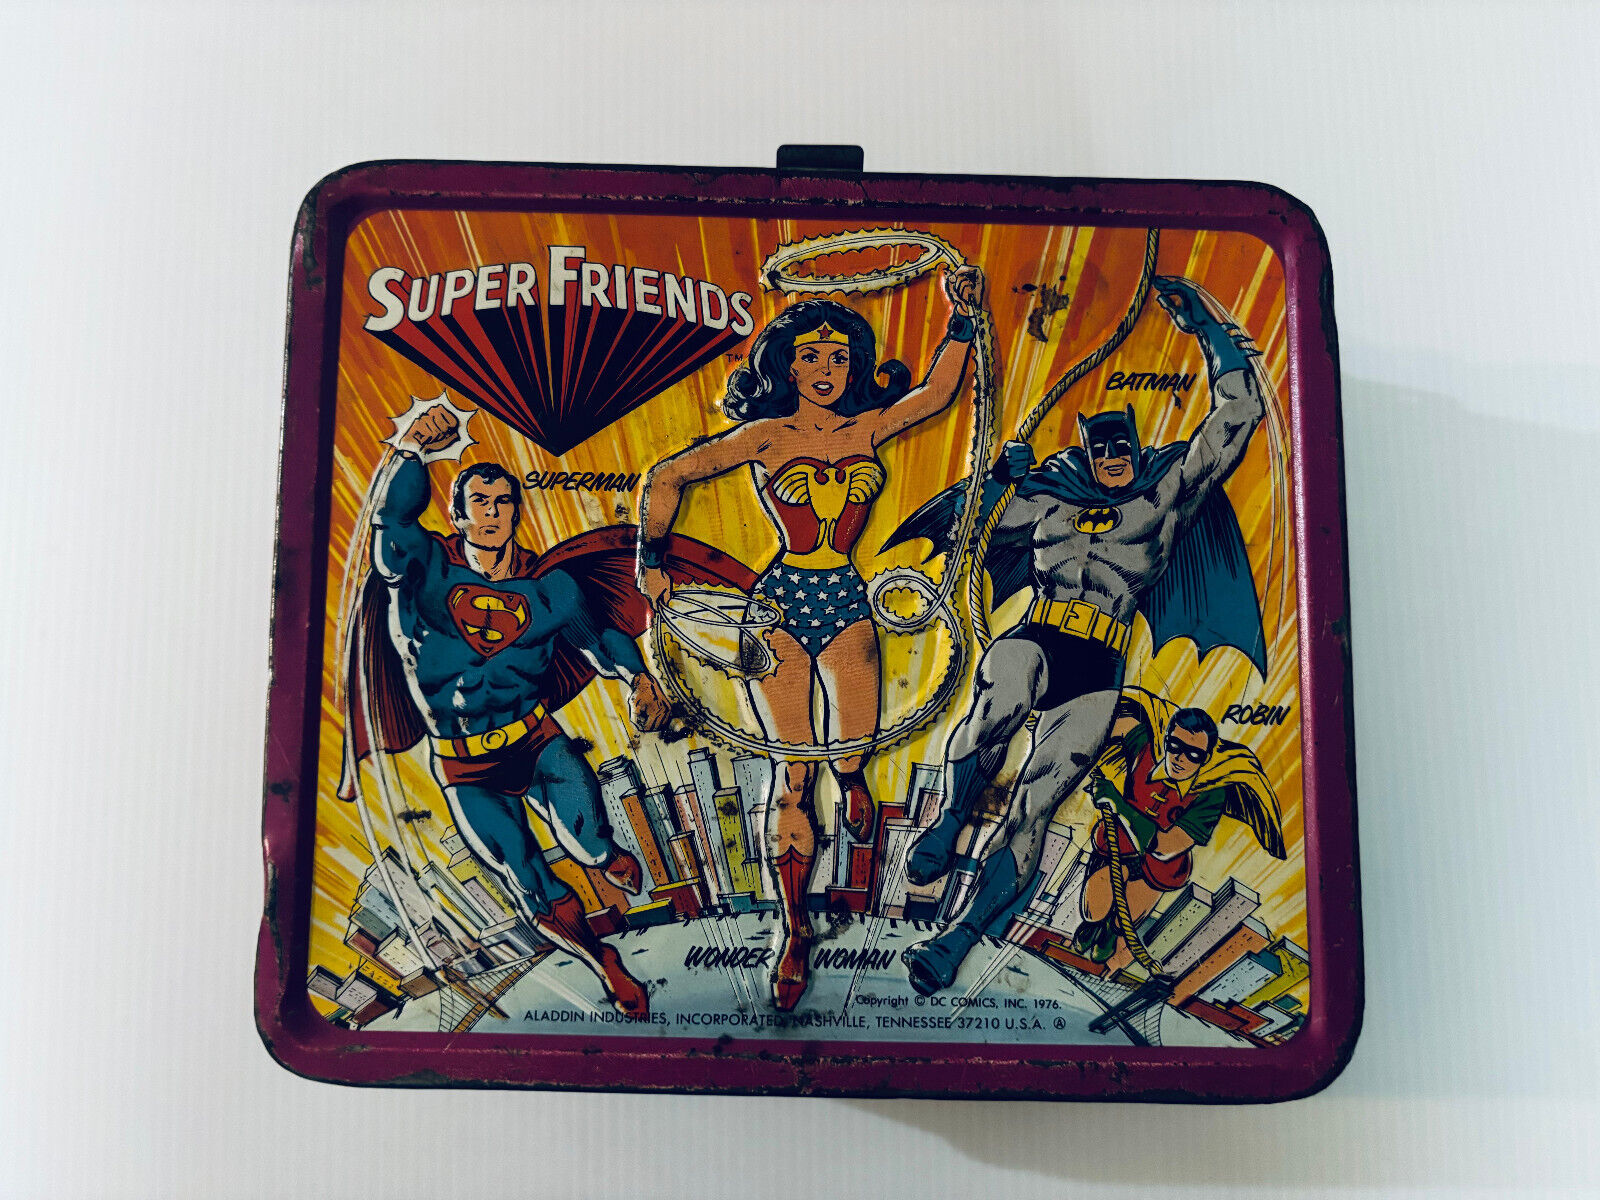 Vintage 1976 DC Comics Super Friends Lunchbox by Aladdin - Damaged